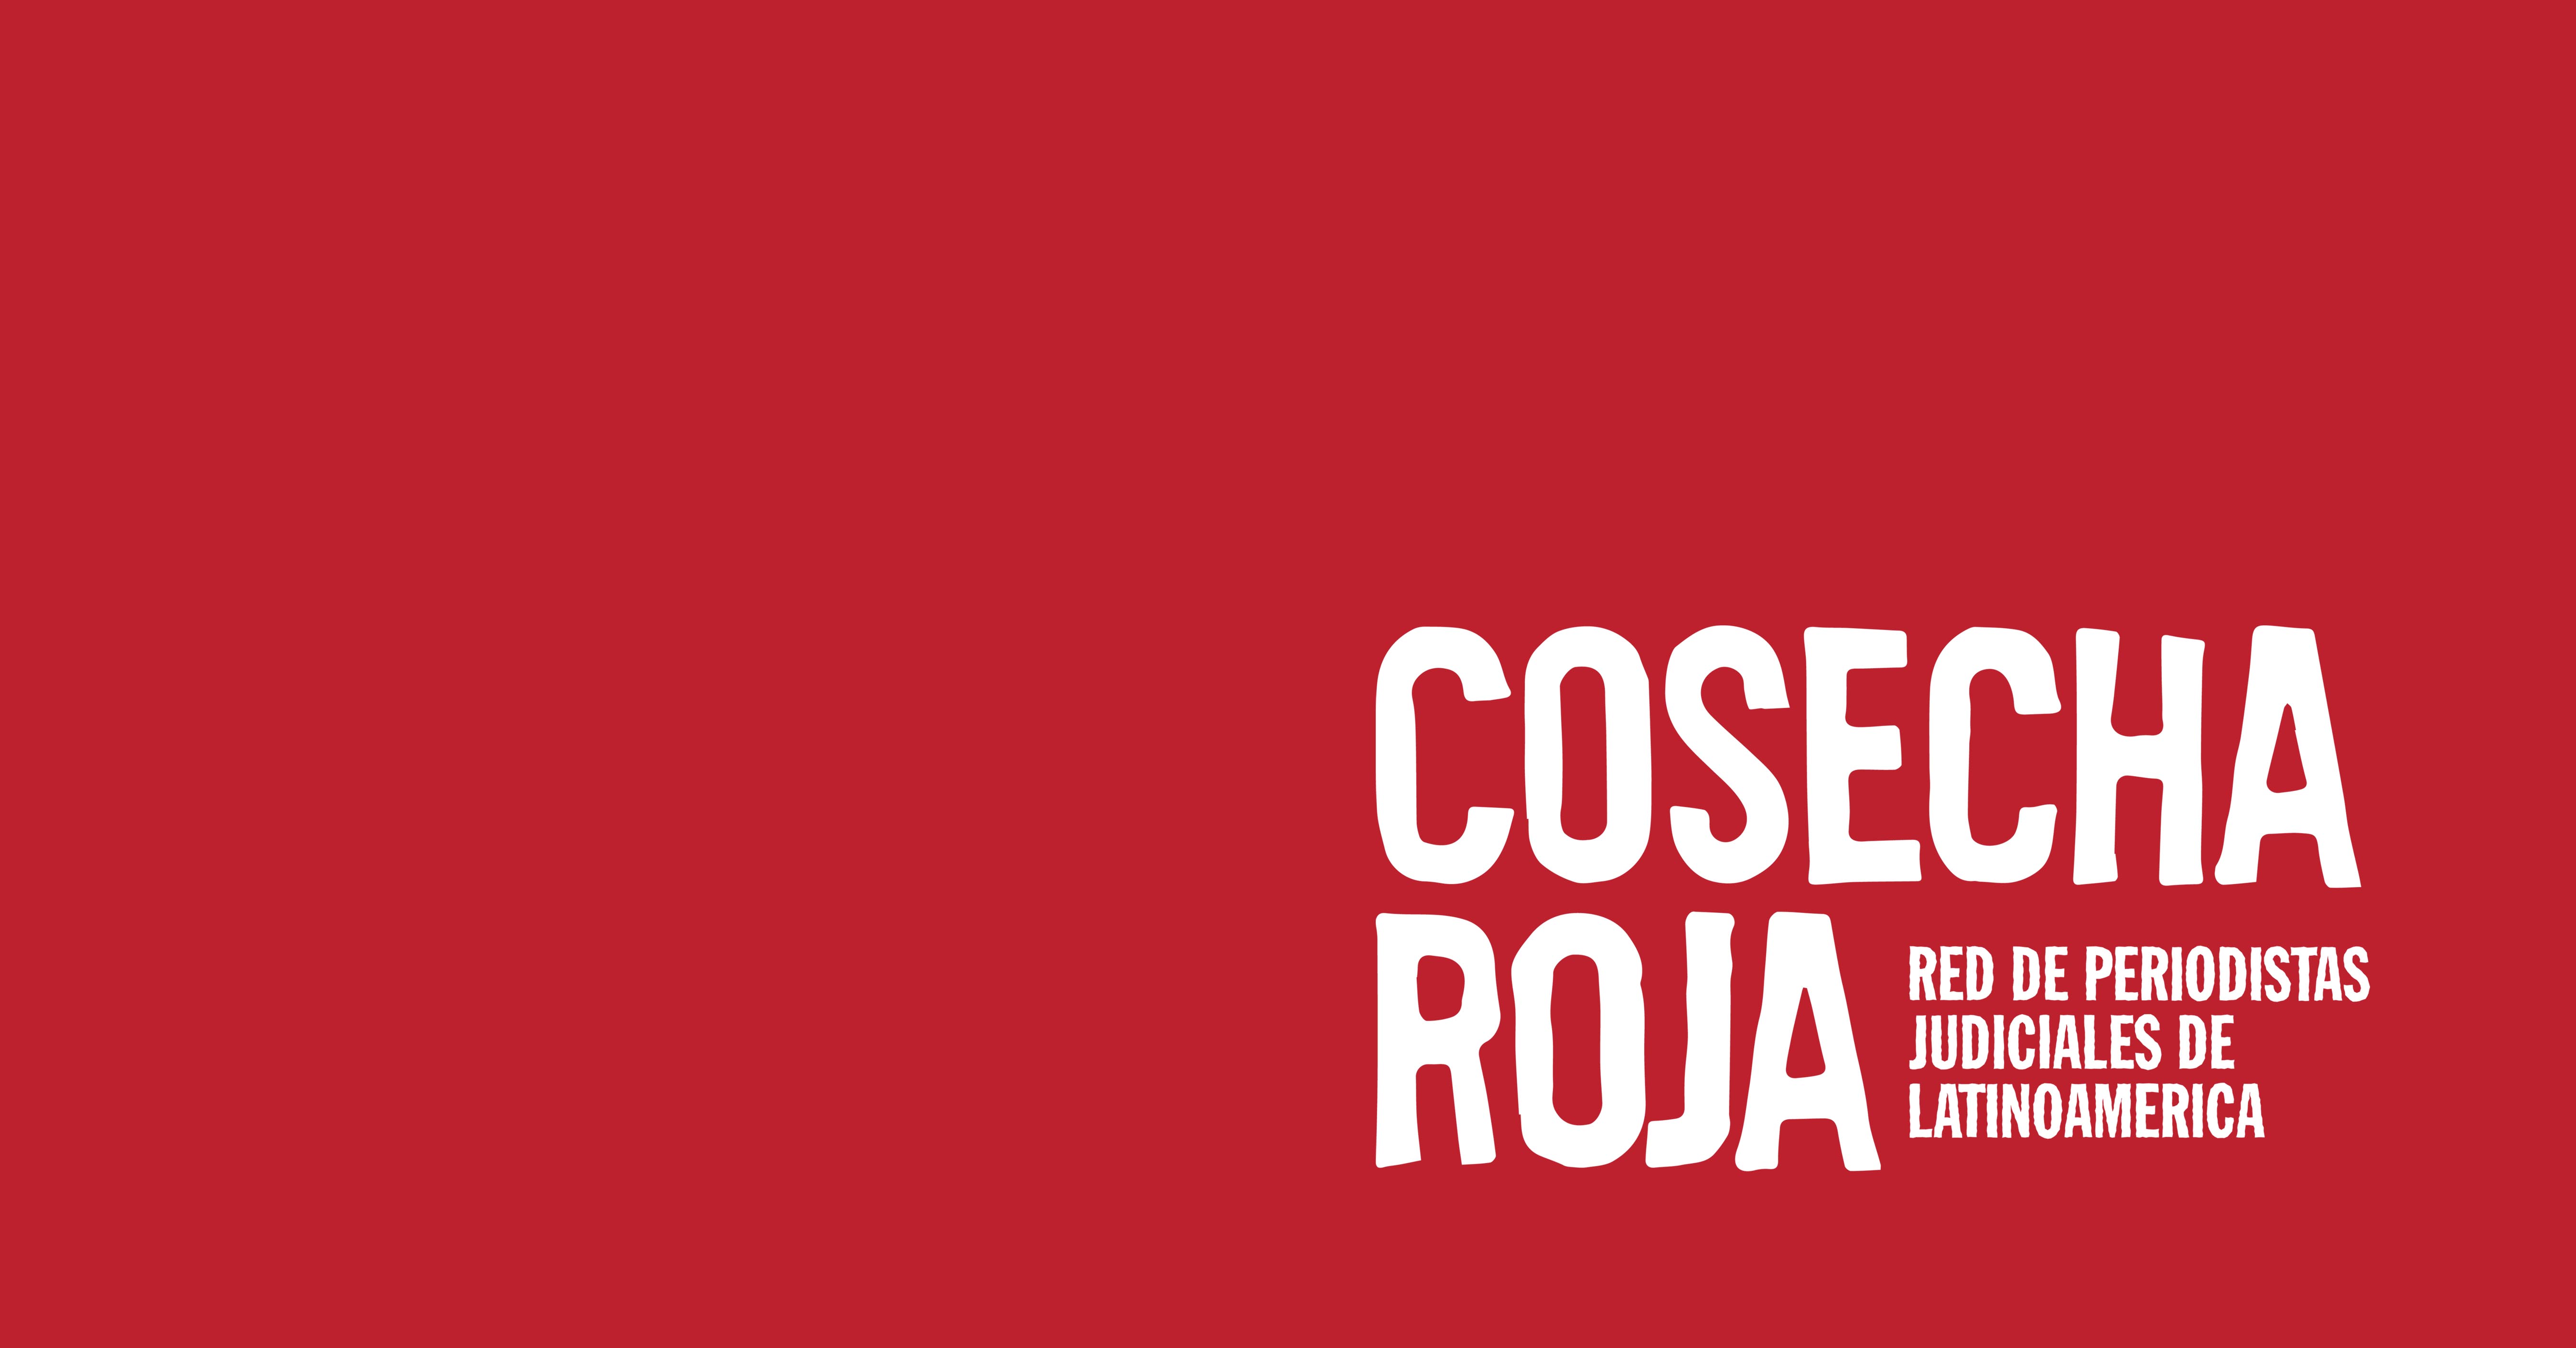 (c) Cosecharoja.org